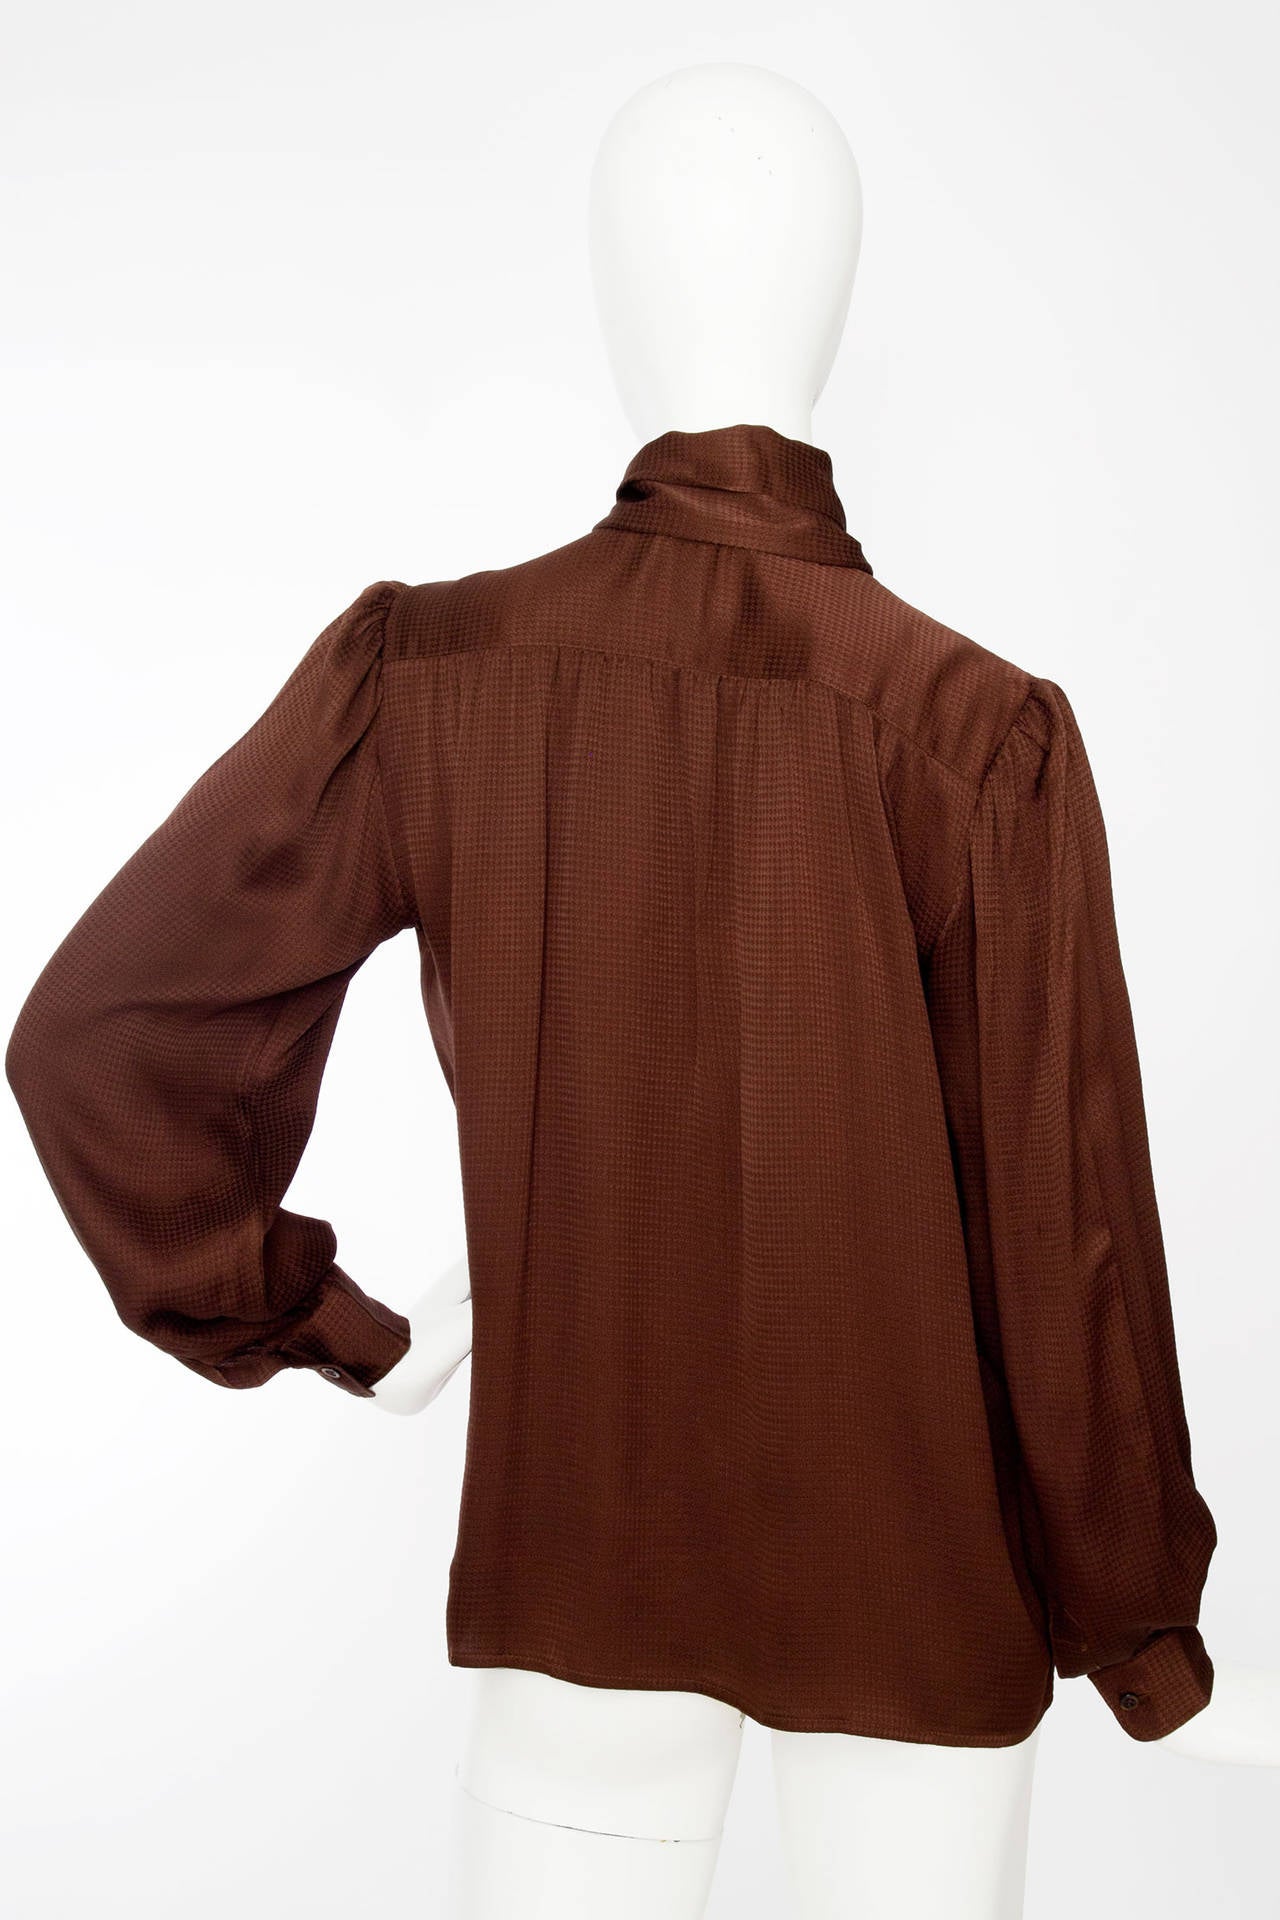 chocolate brown silk blouse